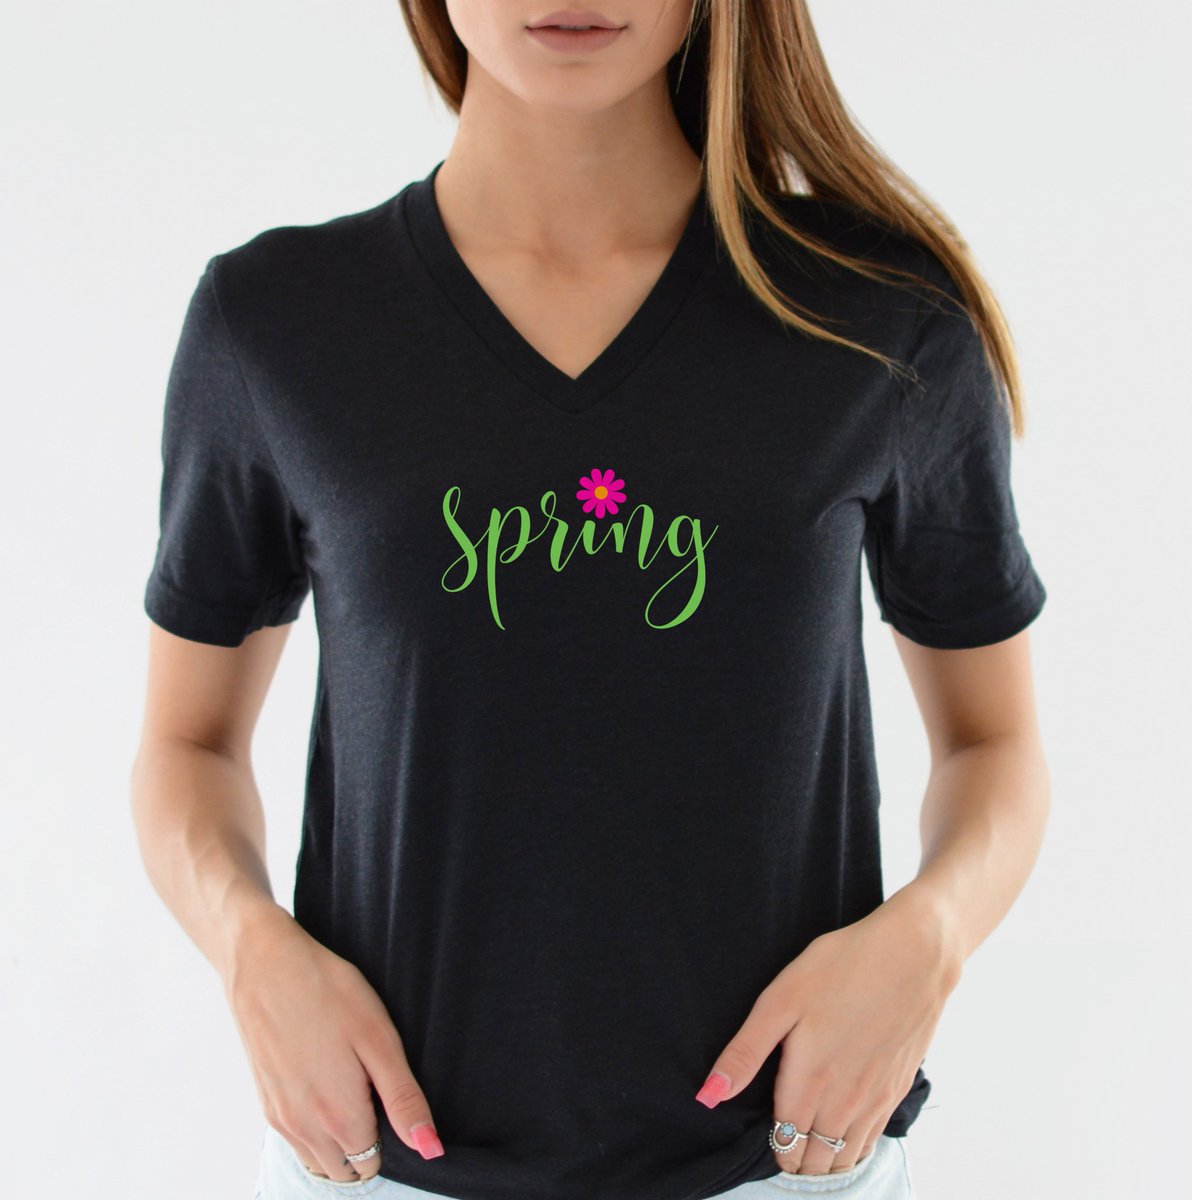 Spring has sprung! #springtshirt #springtee #springshirt #hellospring 
#springflowertshirt